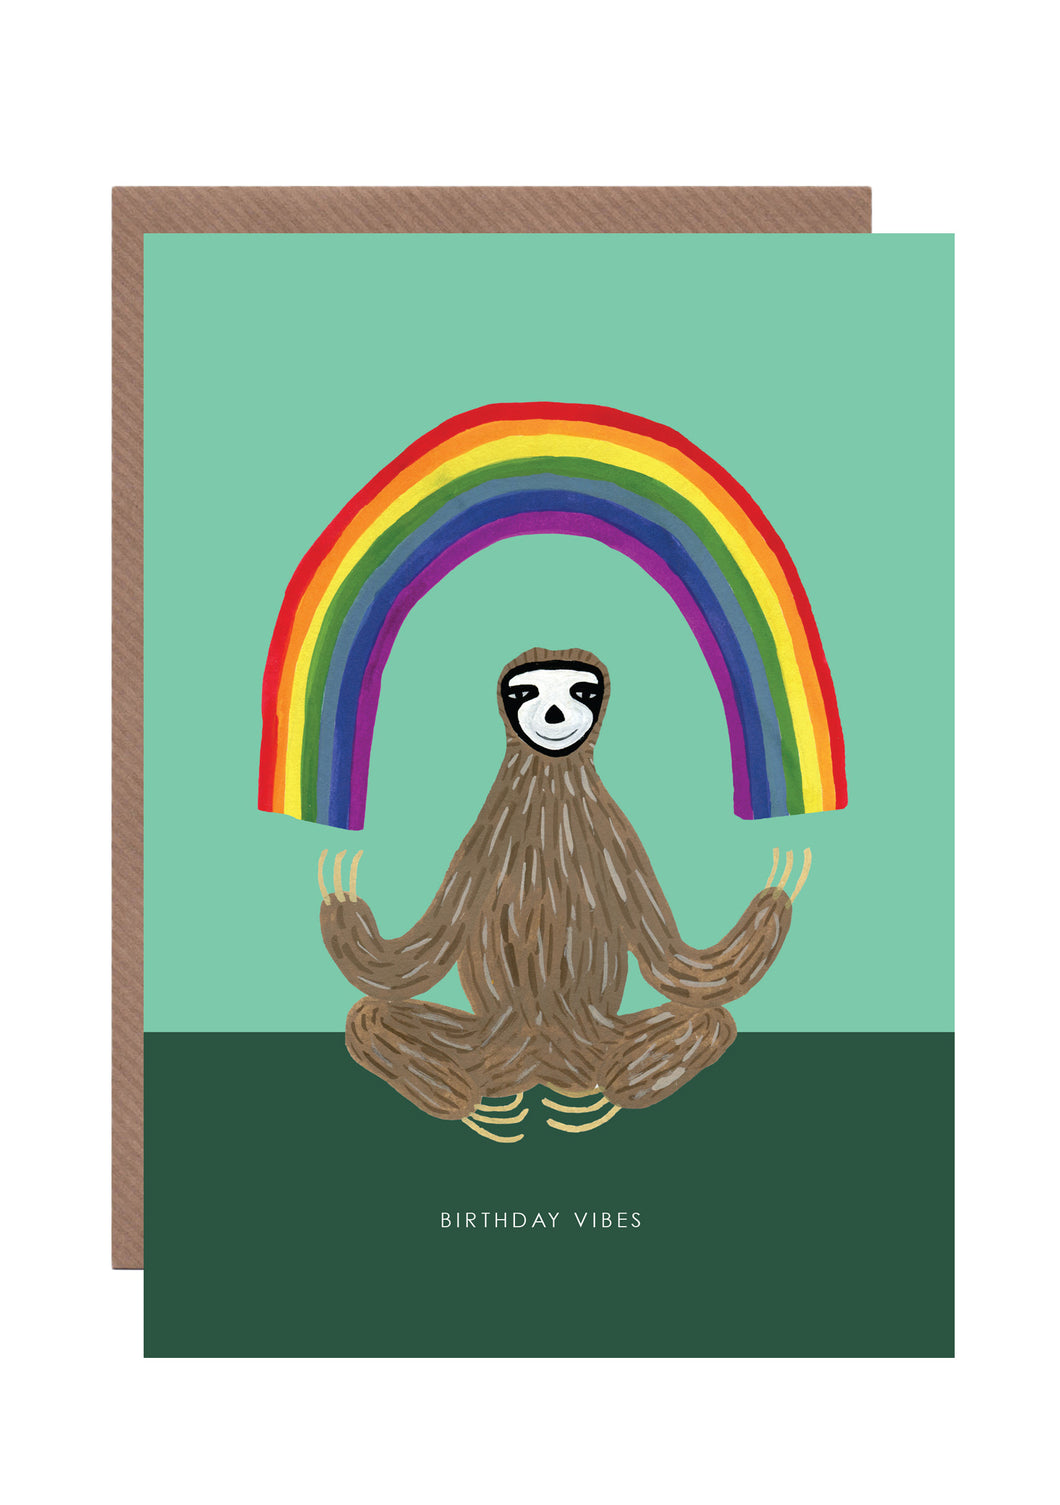 Rainbow Sloth birthday card